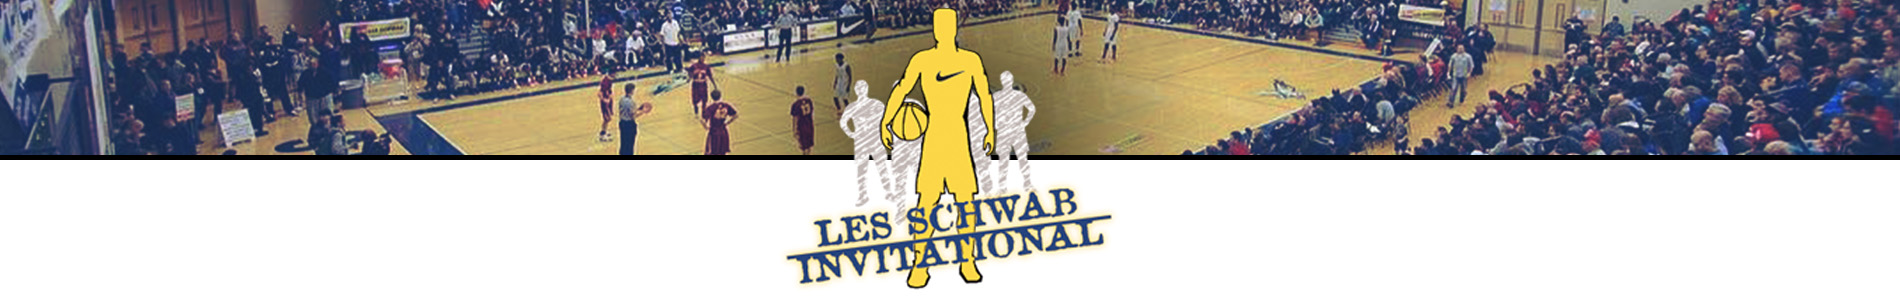 Les Schwab Invitational 2018